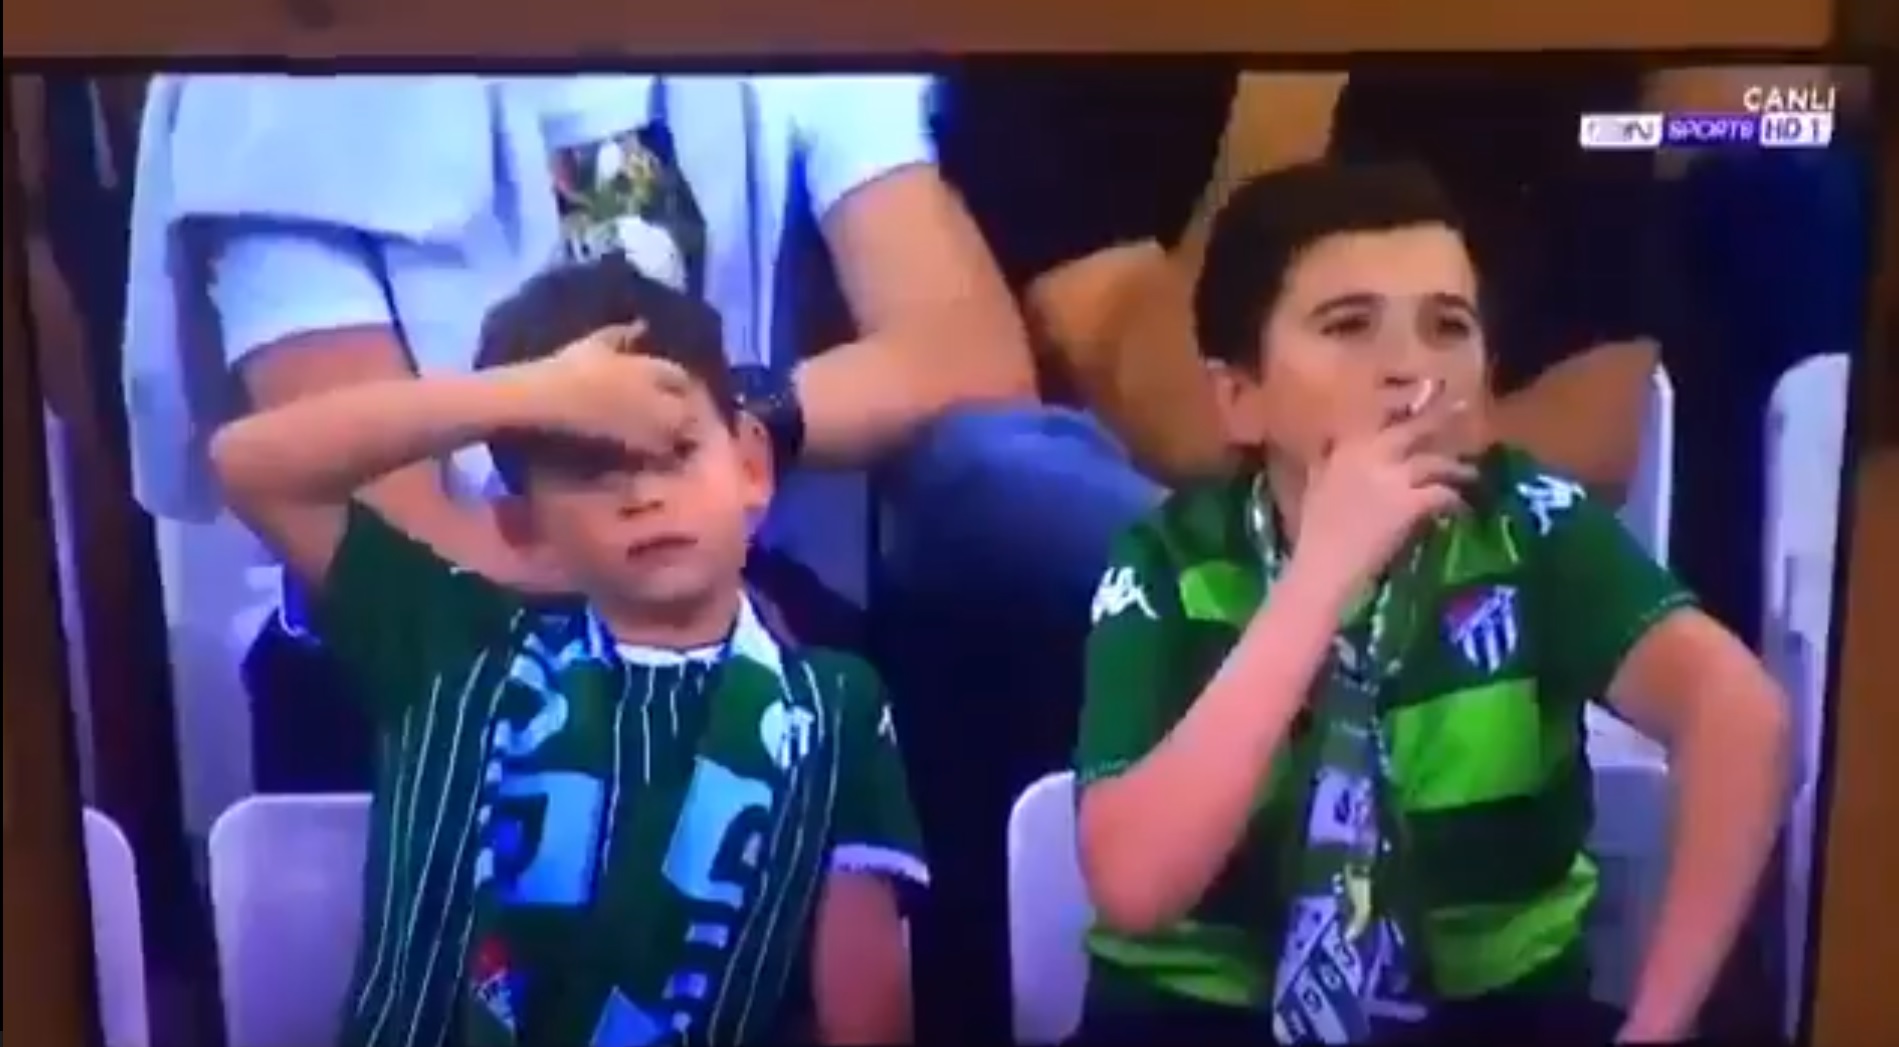 La vérité derrière la vidéo de &quot;l'enfant&quot; en train de fumer lors d'un match de football